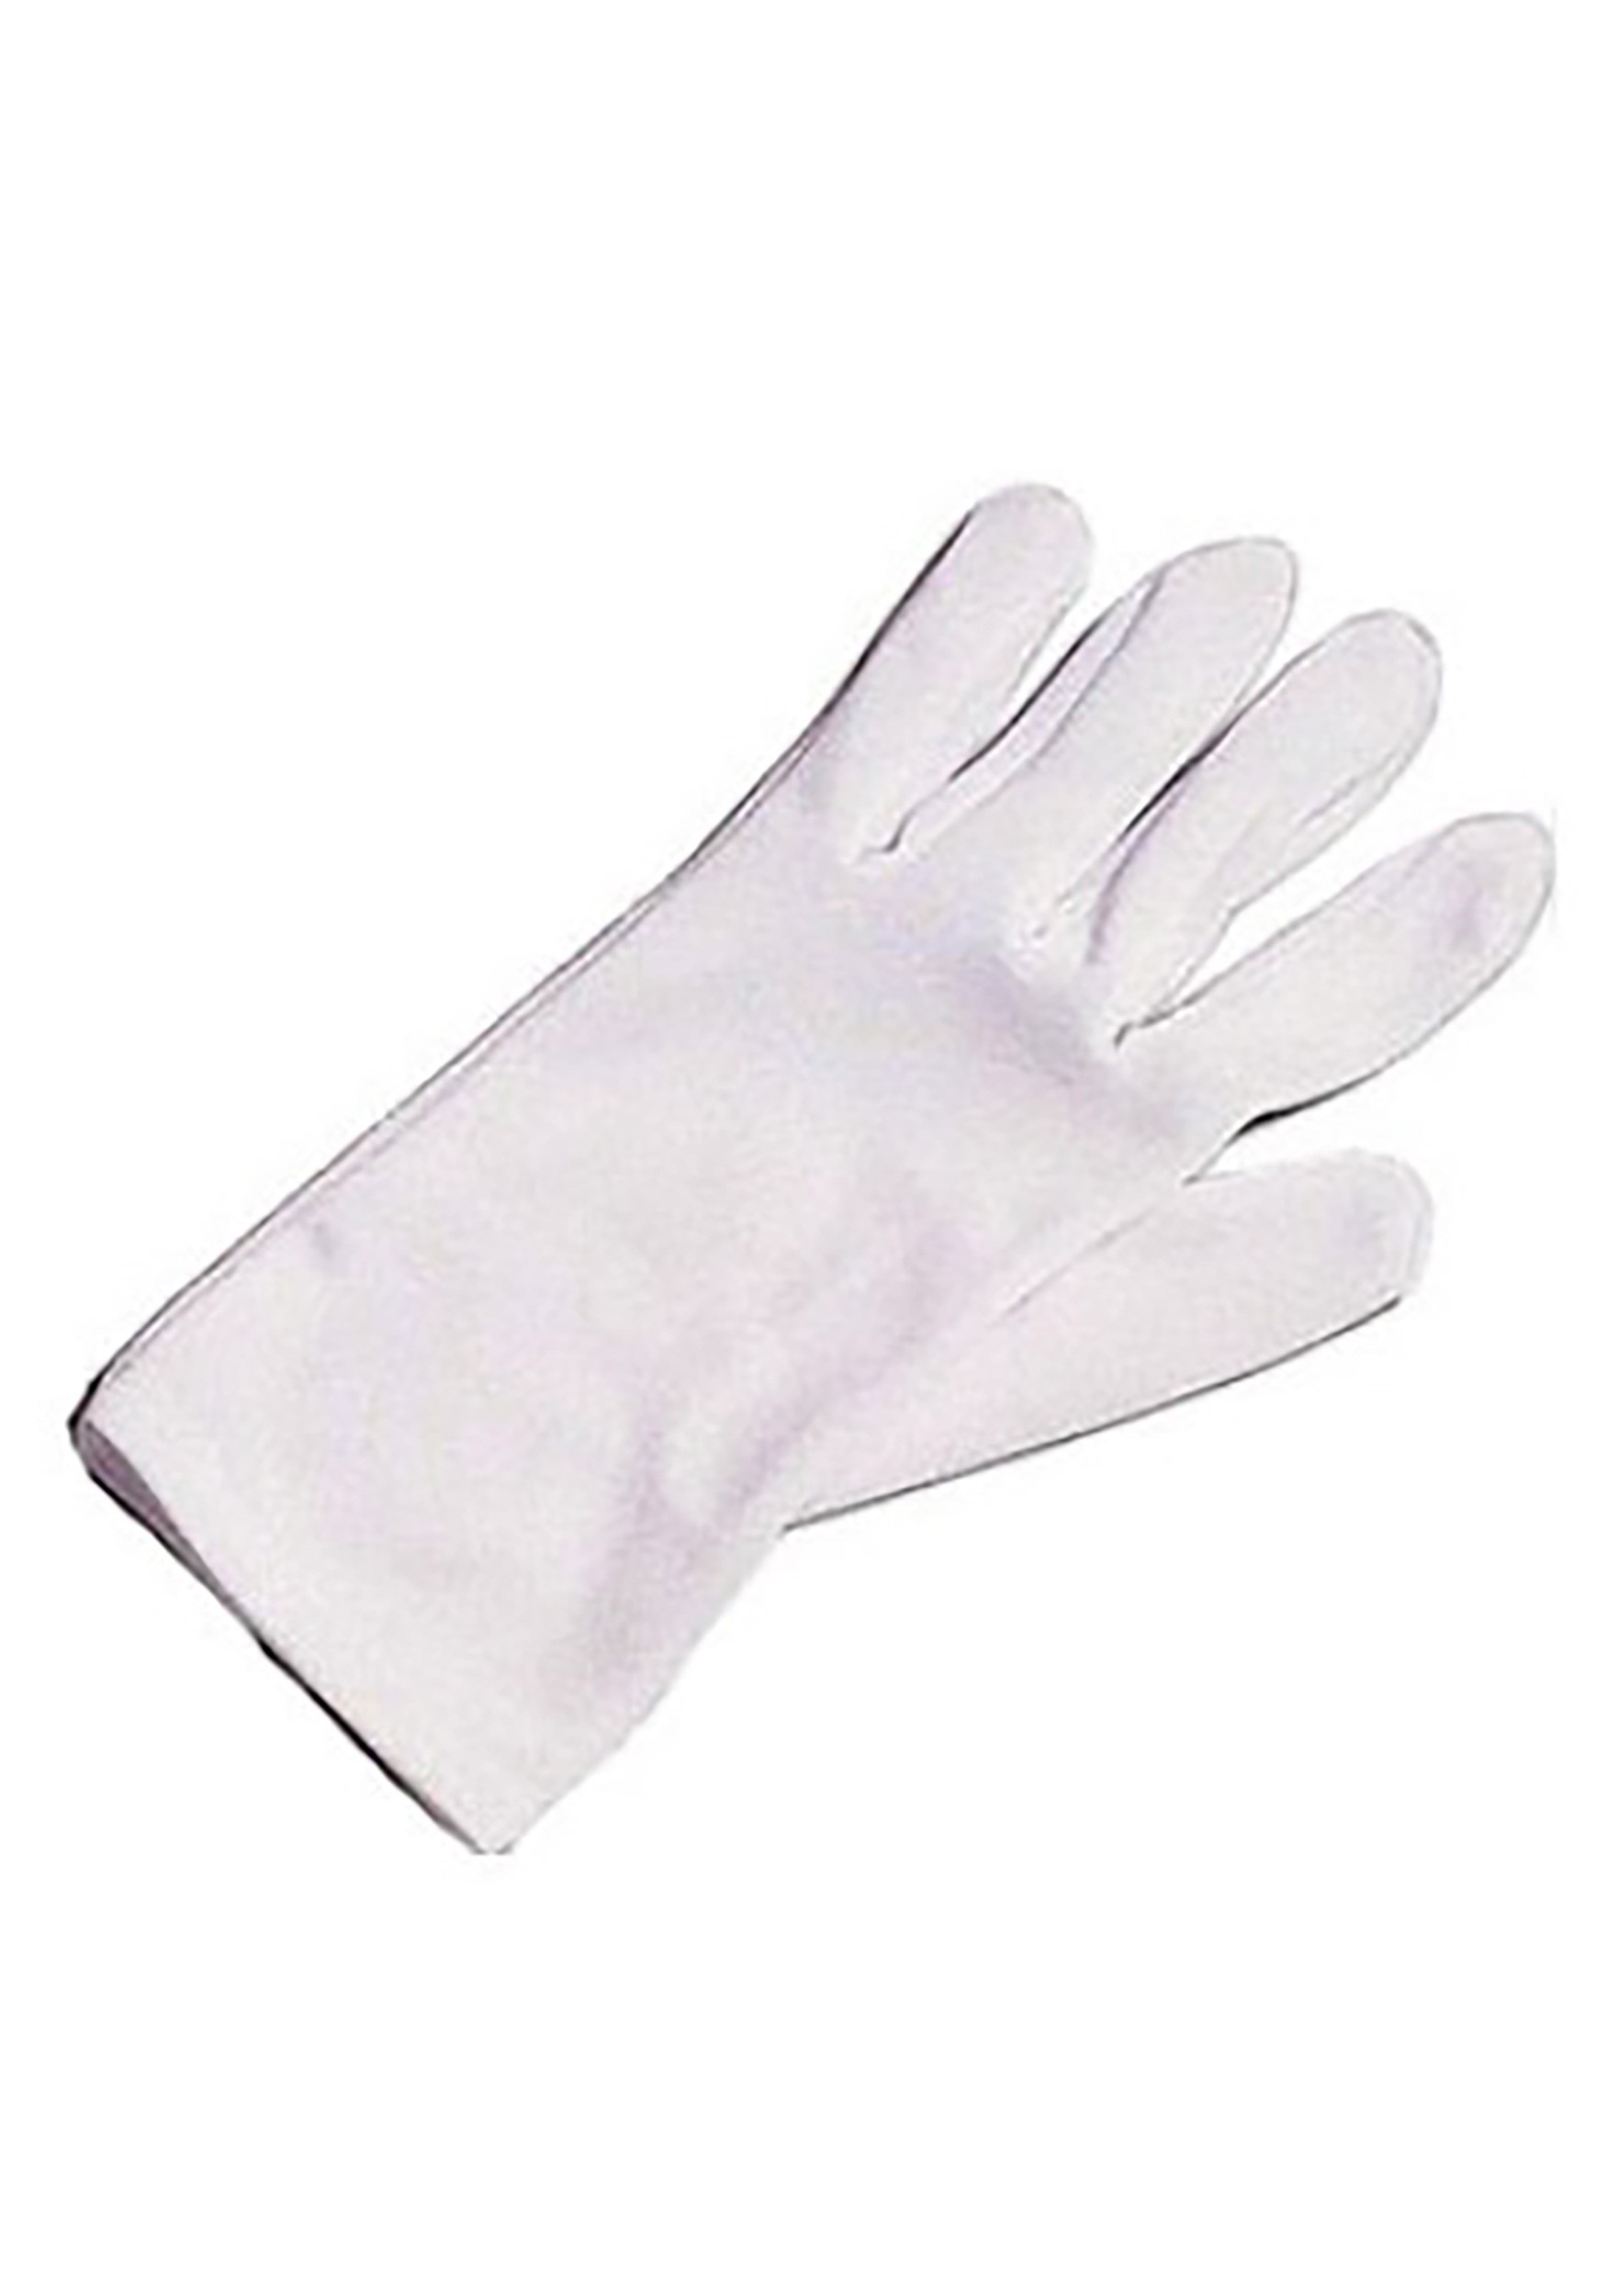 https://images.halloweencostumes.com.mx/products/6290/1-1/guantes-de-disfraz-blancos-para-ninos.jpg